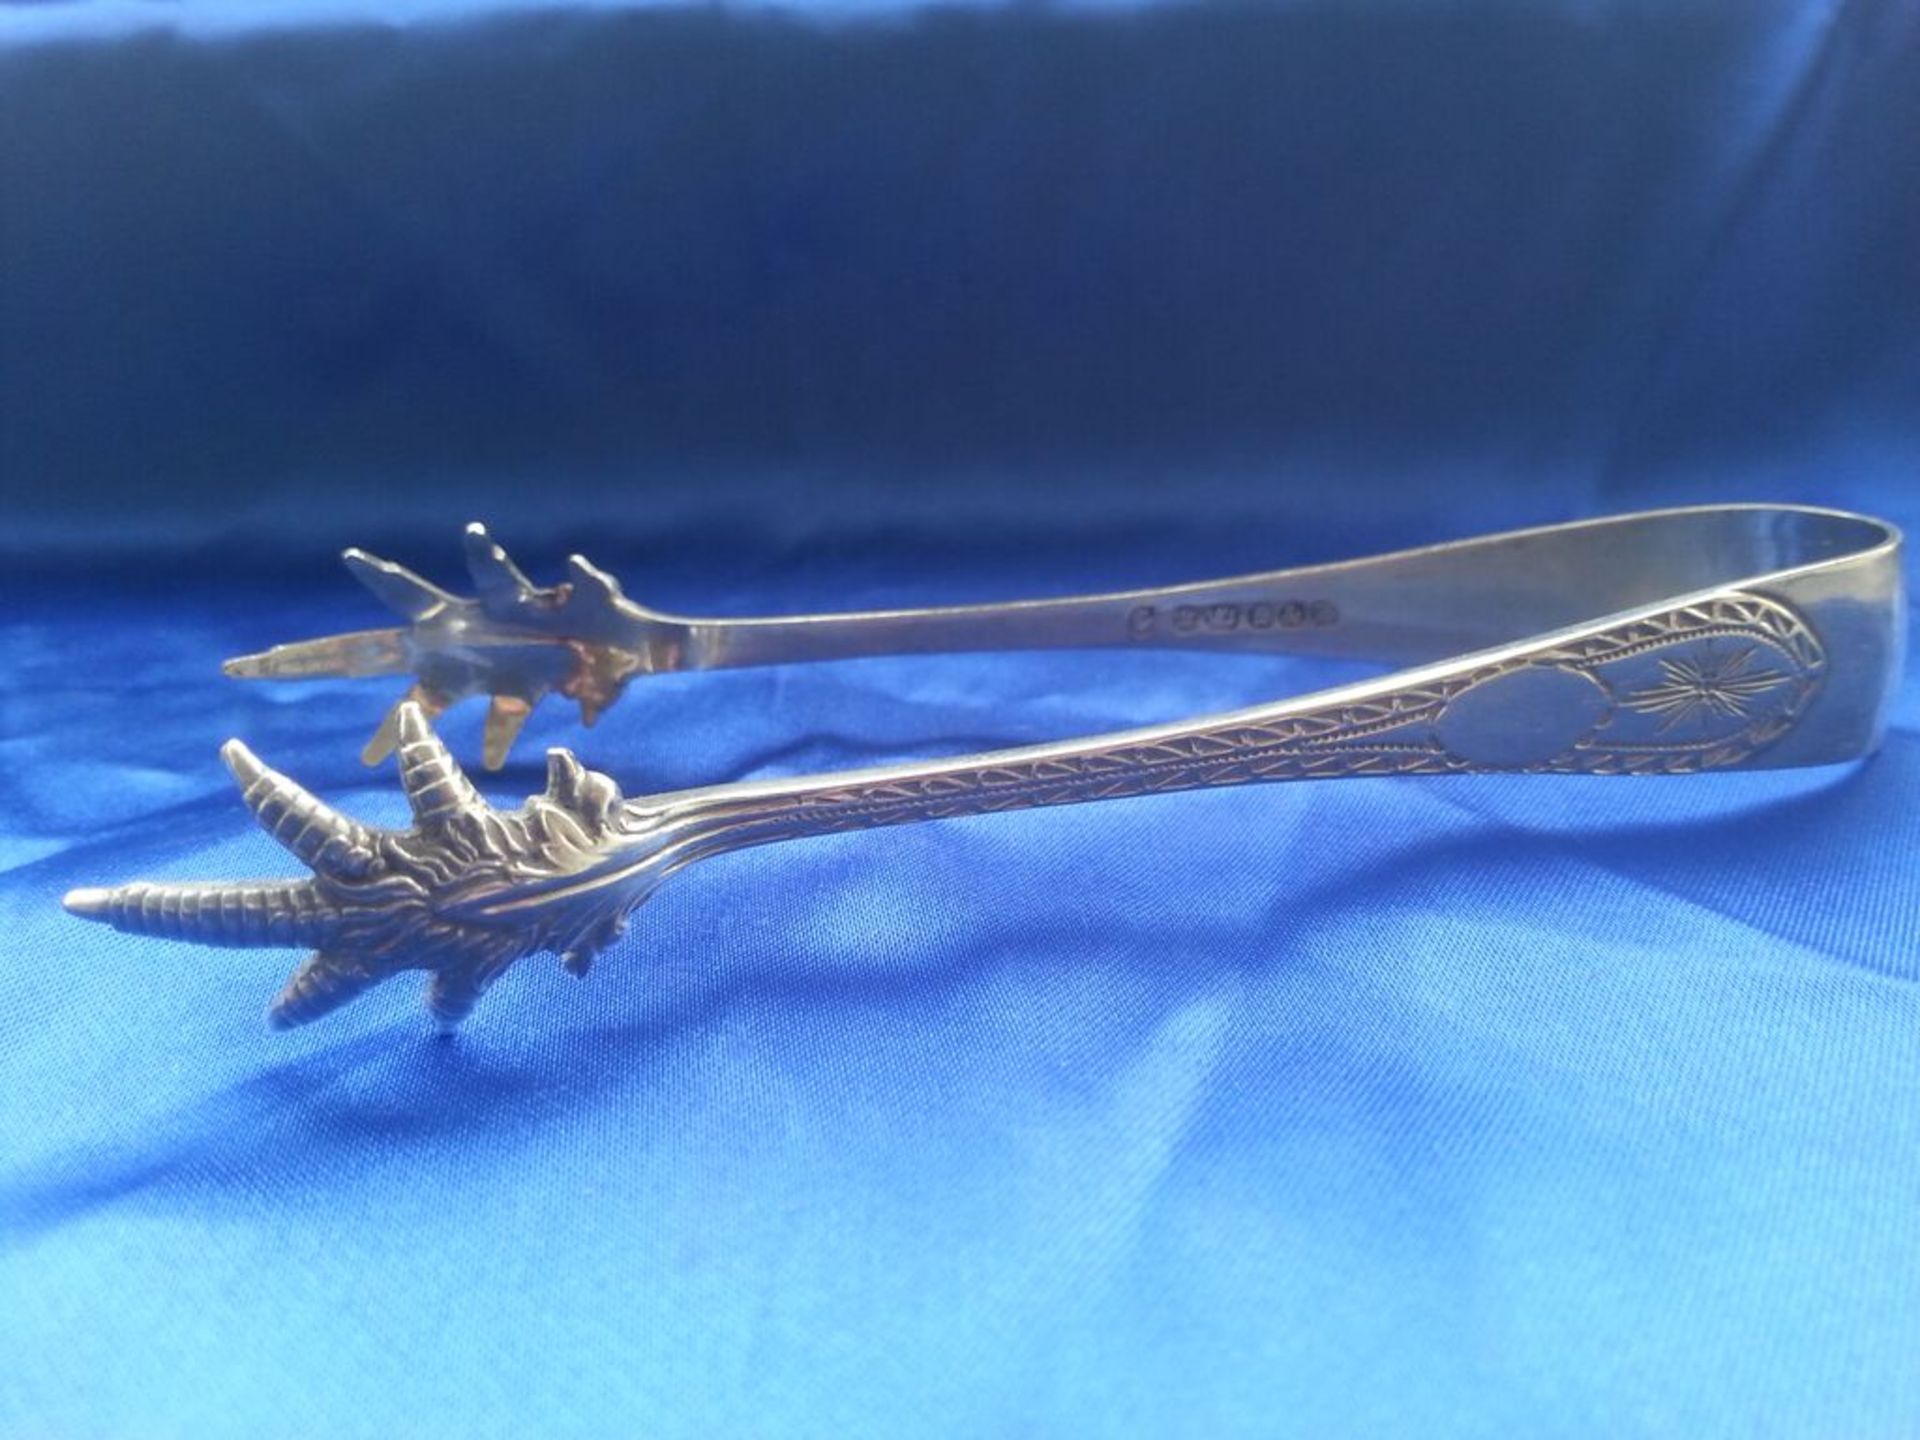 Antique Silver Plate Dragon Claw Design Sugar Tongs/Ice Nips by Deykin & Harrison.